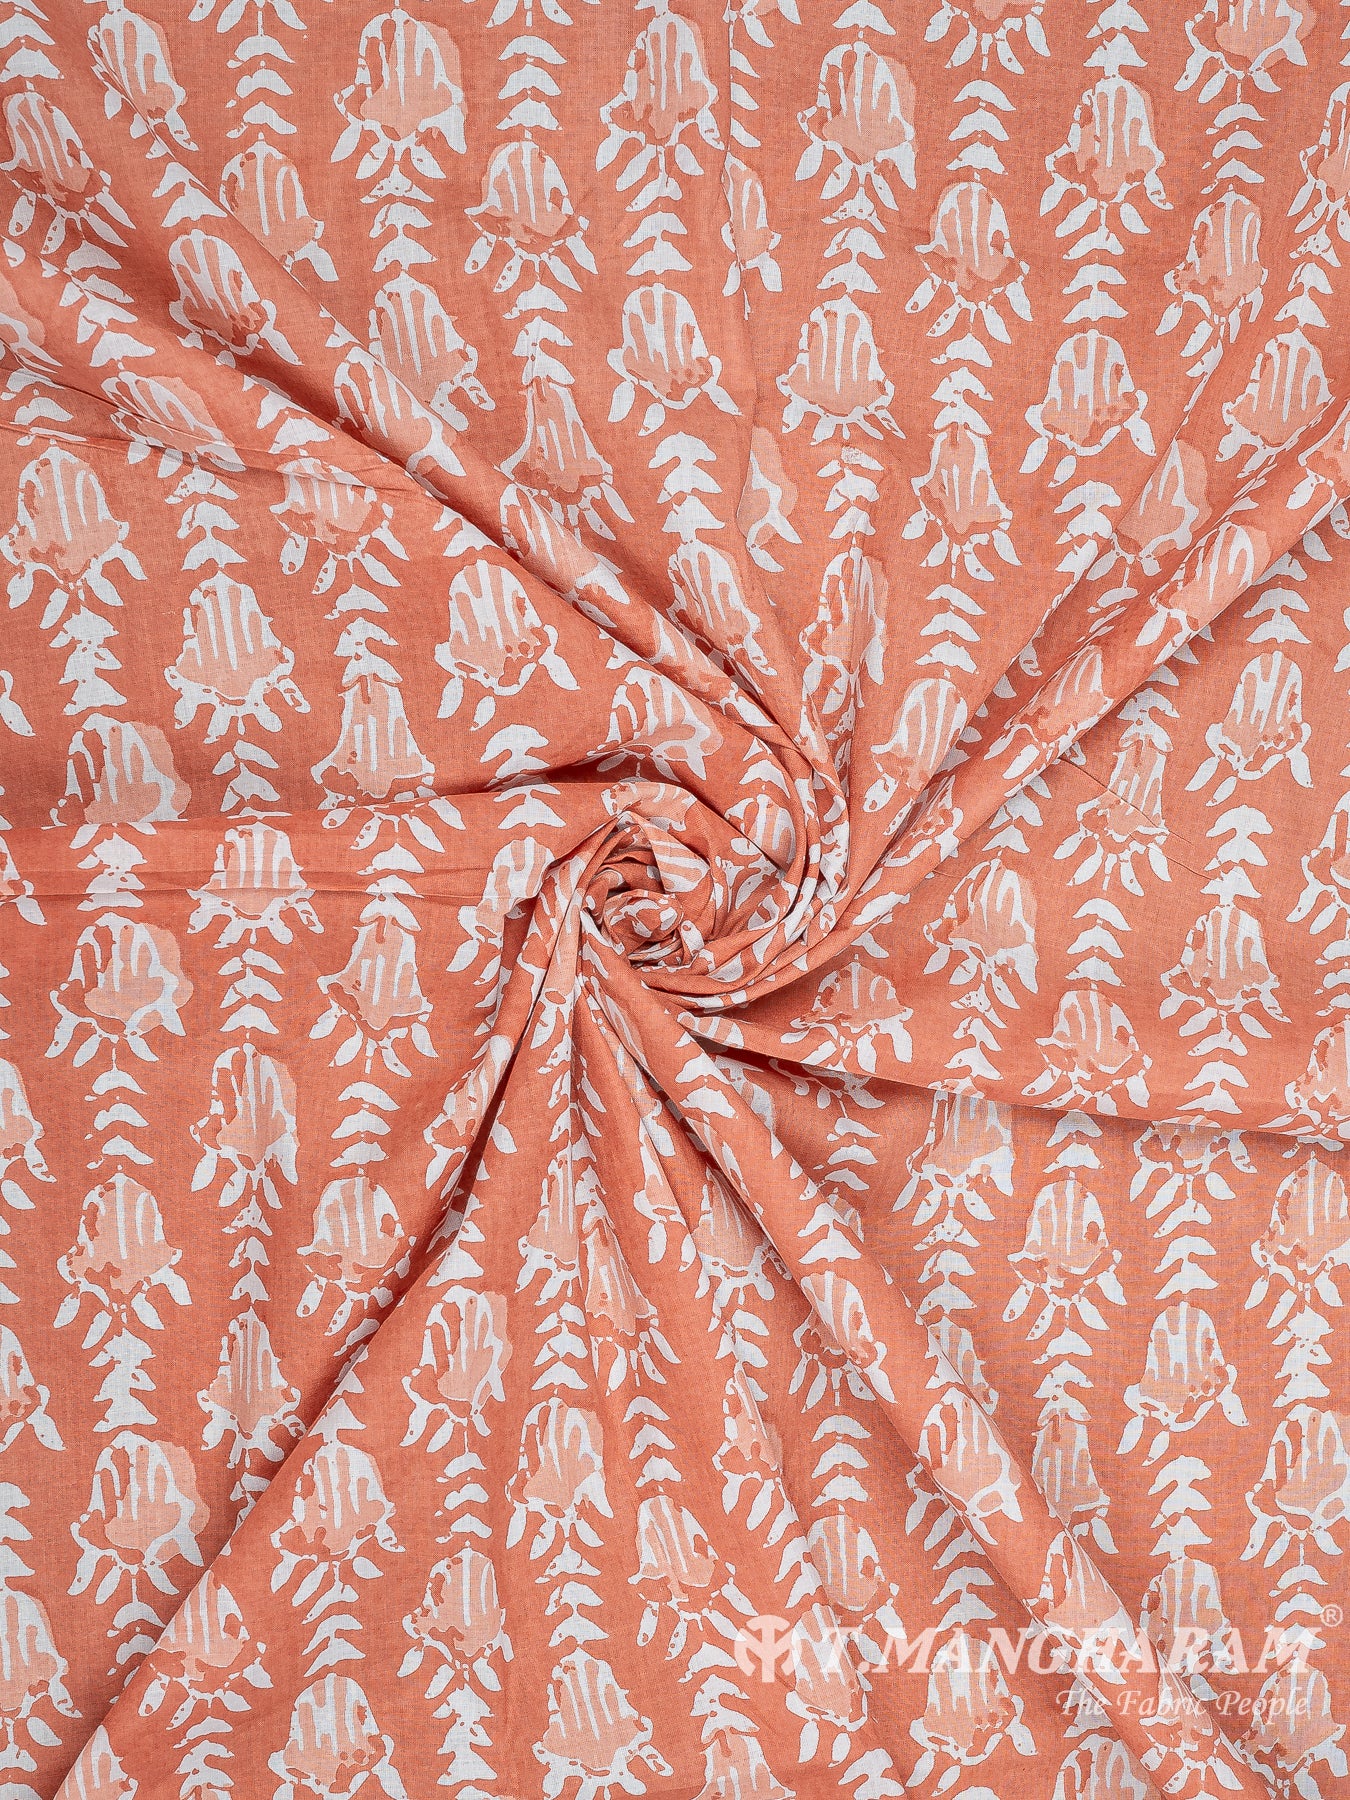 Peach Cotton Fabric - EC8348 view-1